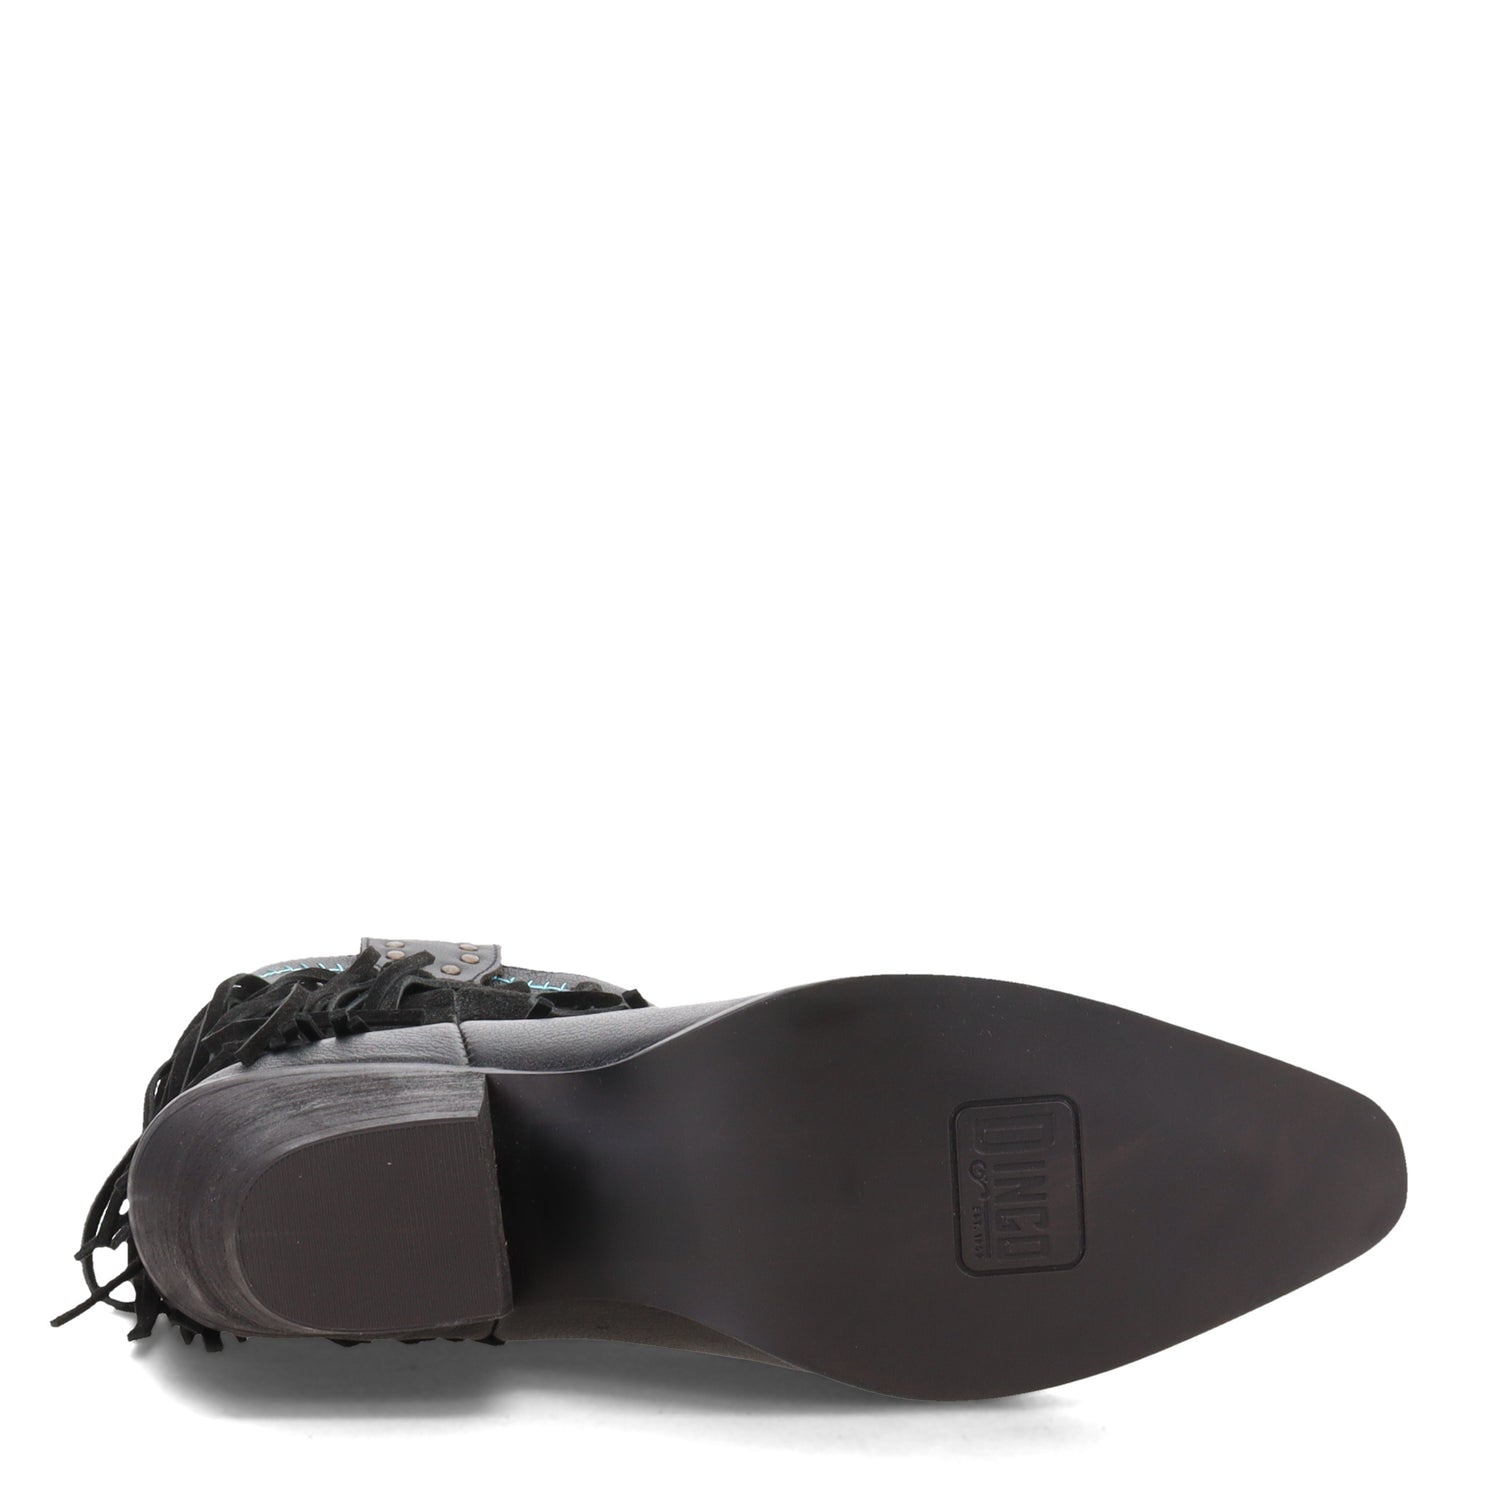 Peltz Shoes  Women's Dingo Gypsy Boot BLACK DI737-BLACK